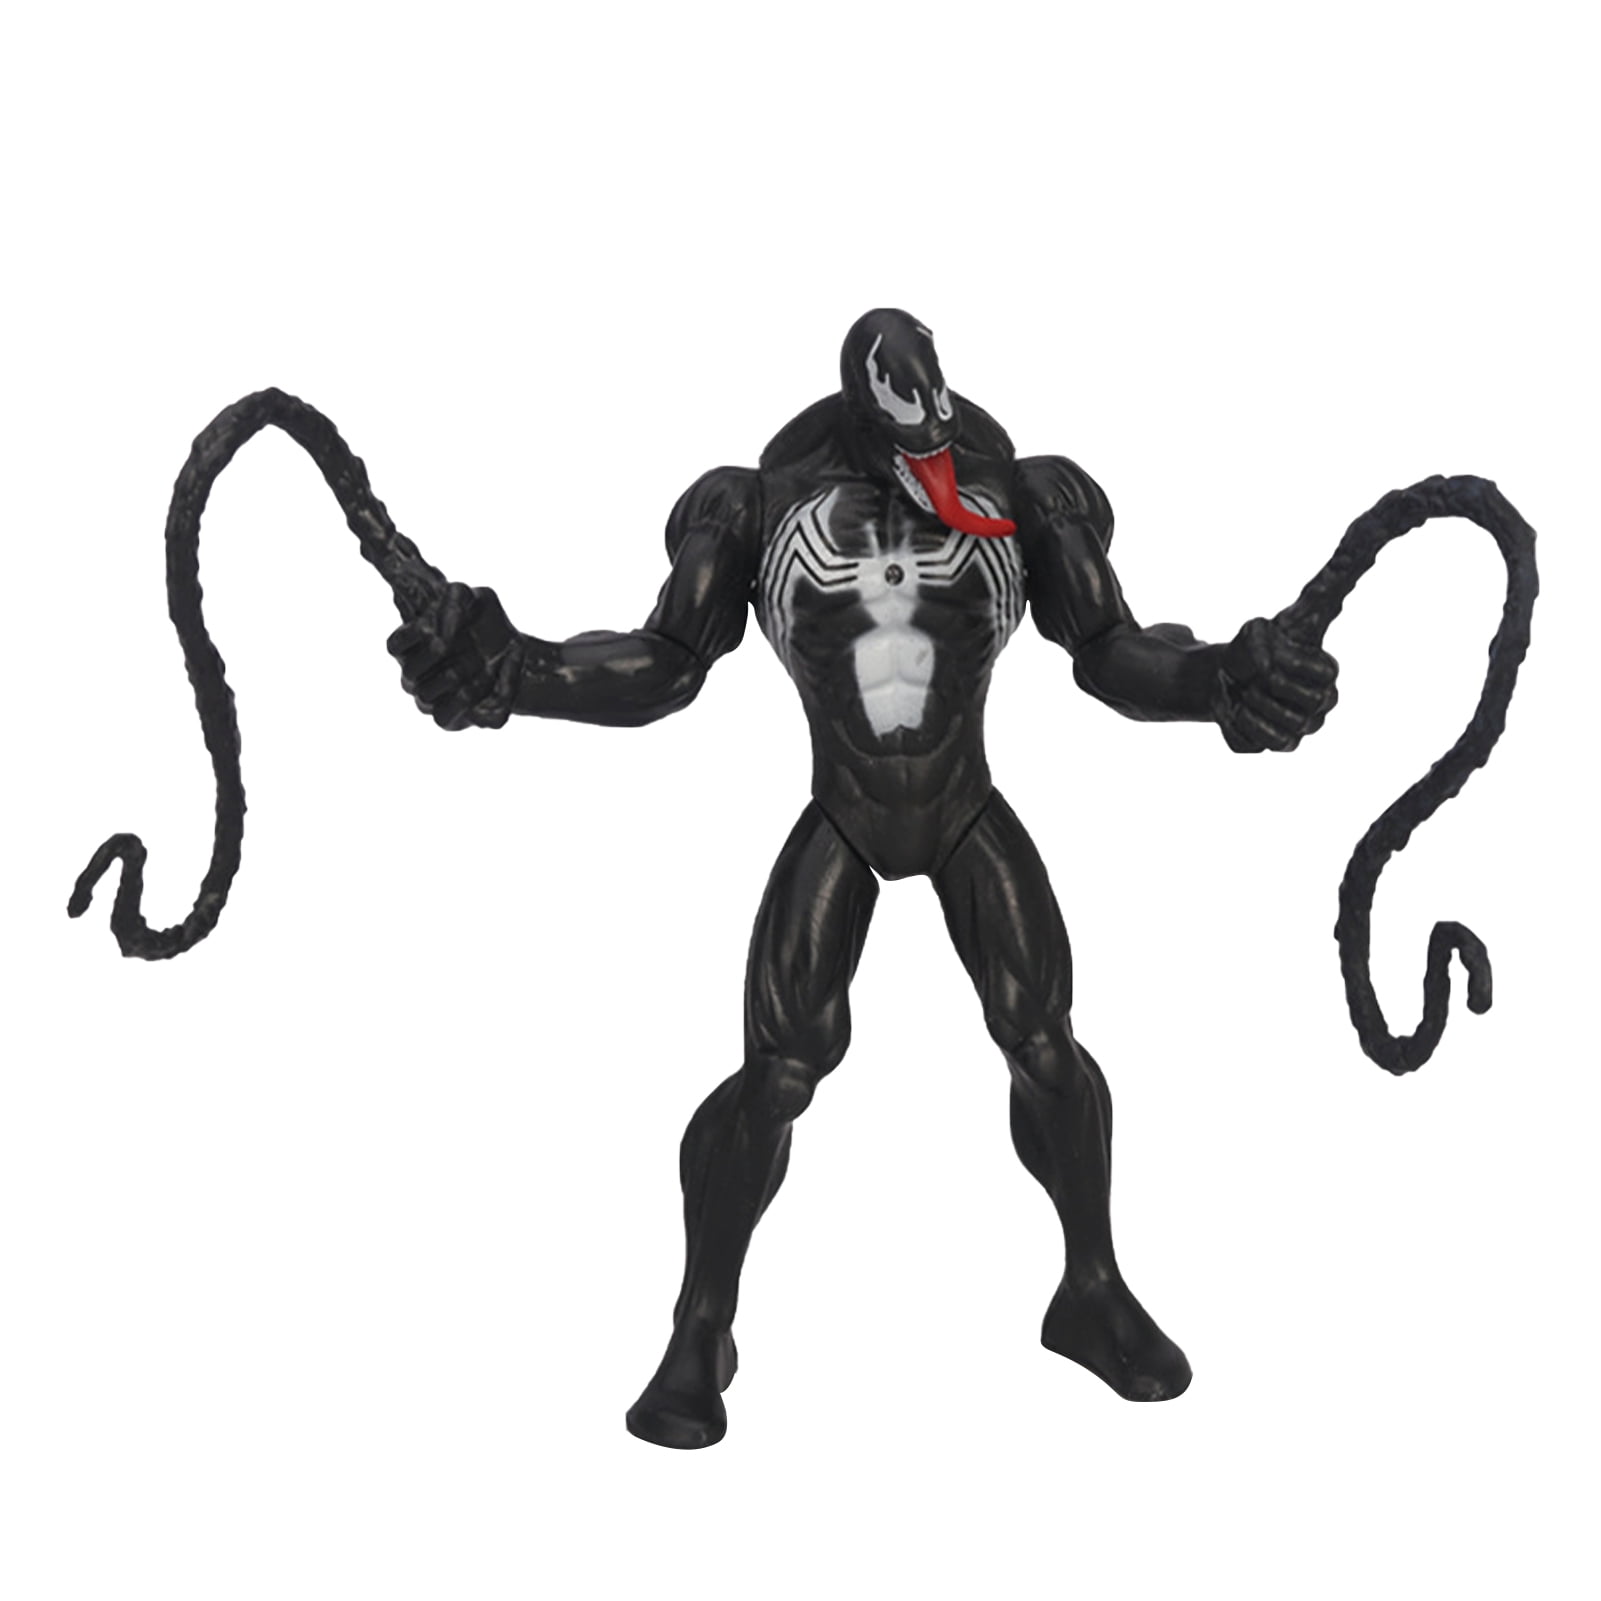 Buy Venom Action Figure Superhero Good Guy Bad Guy Toy Online in India ...